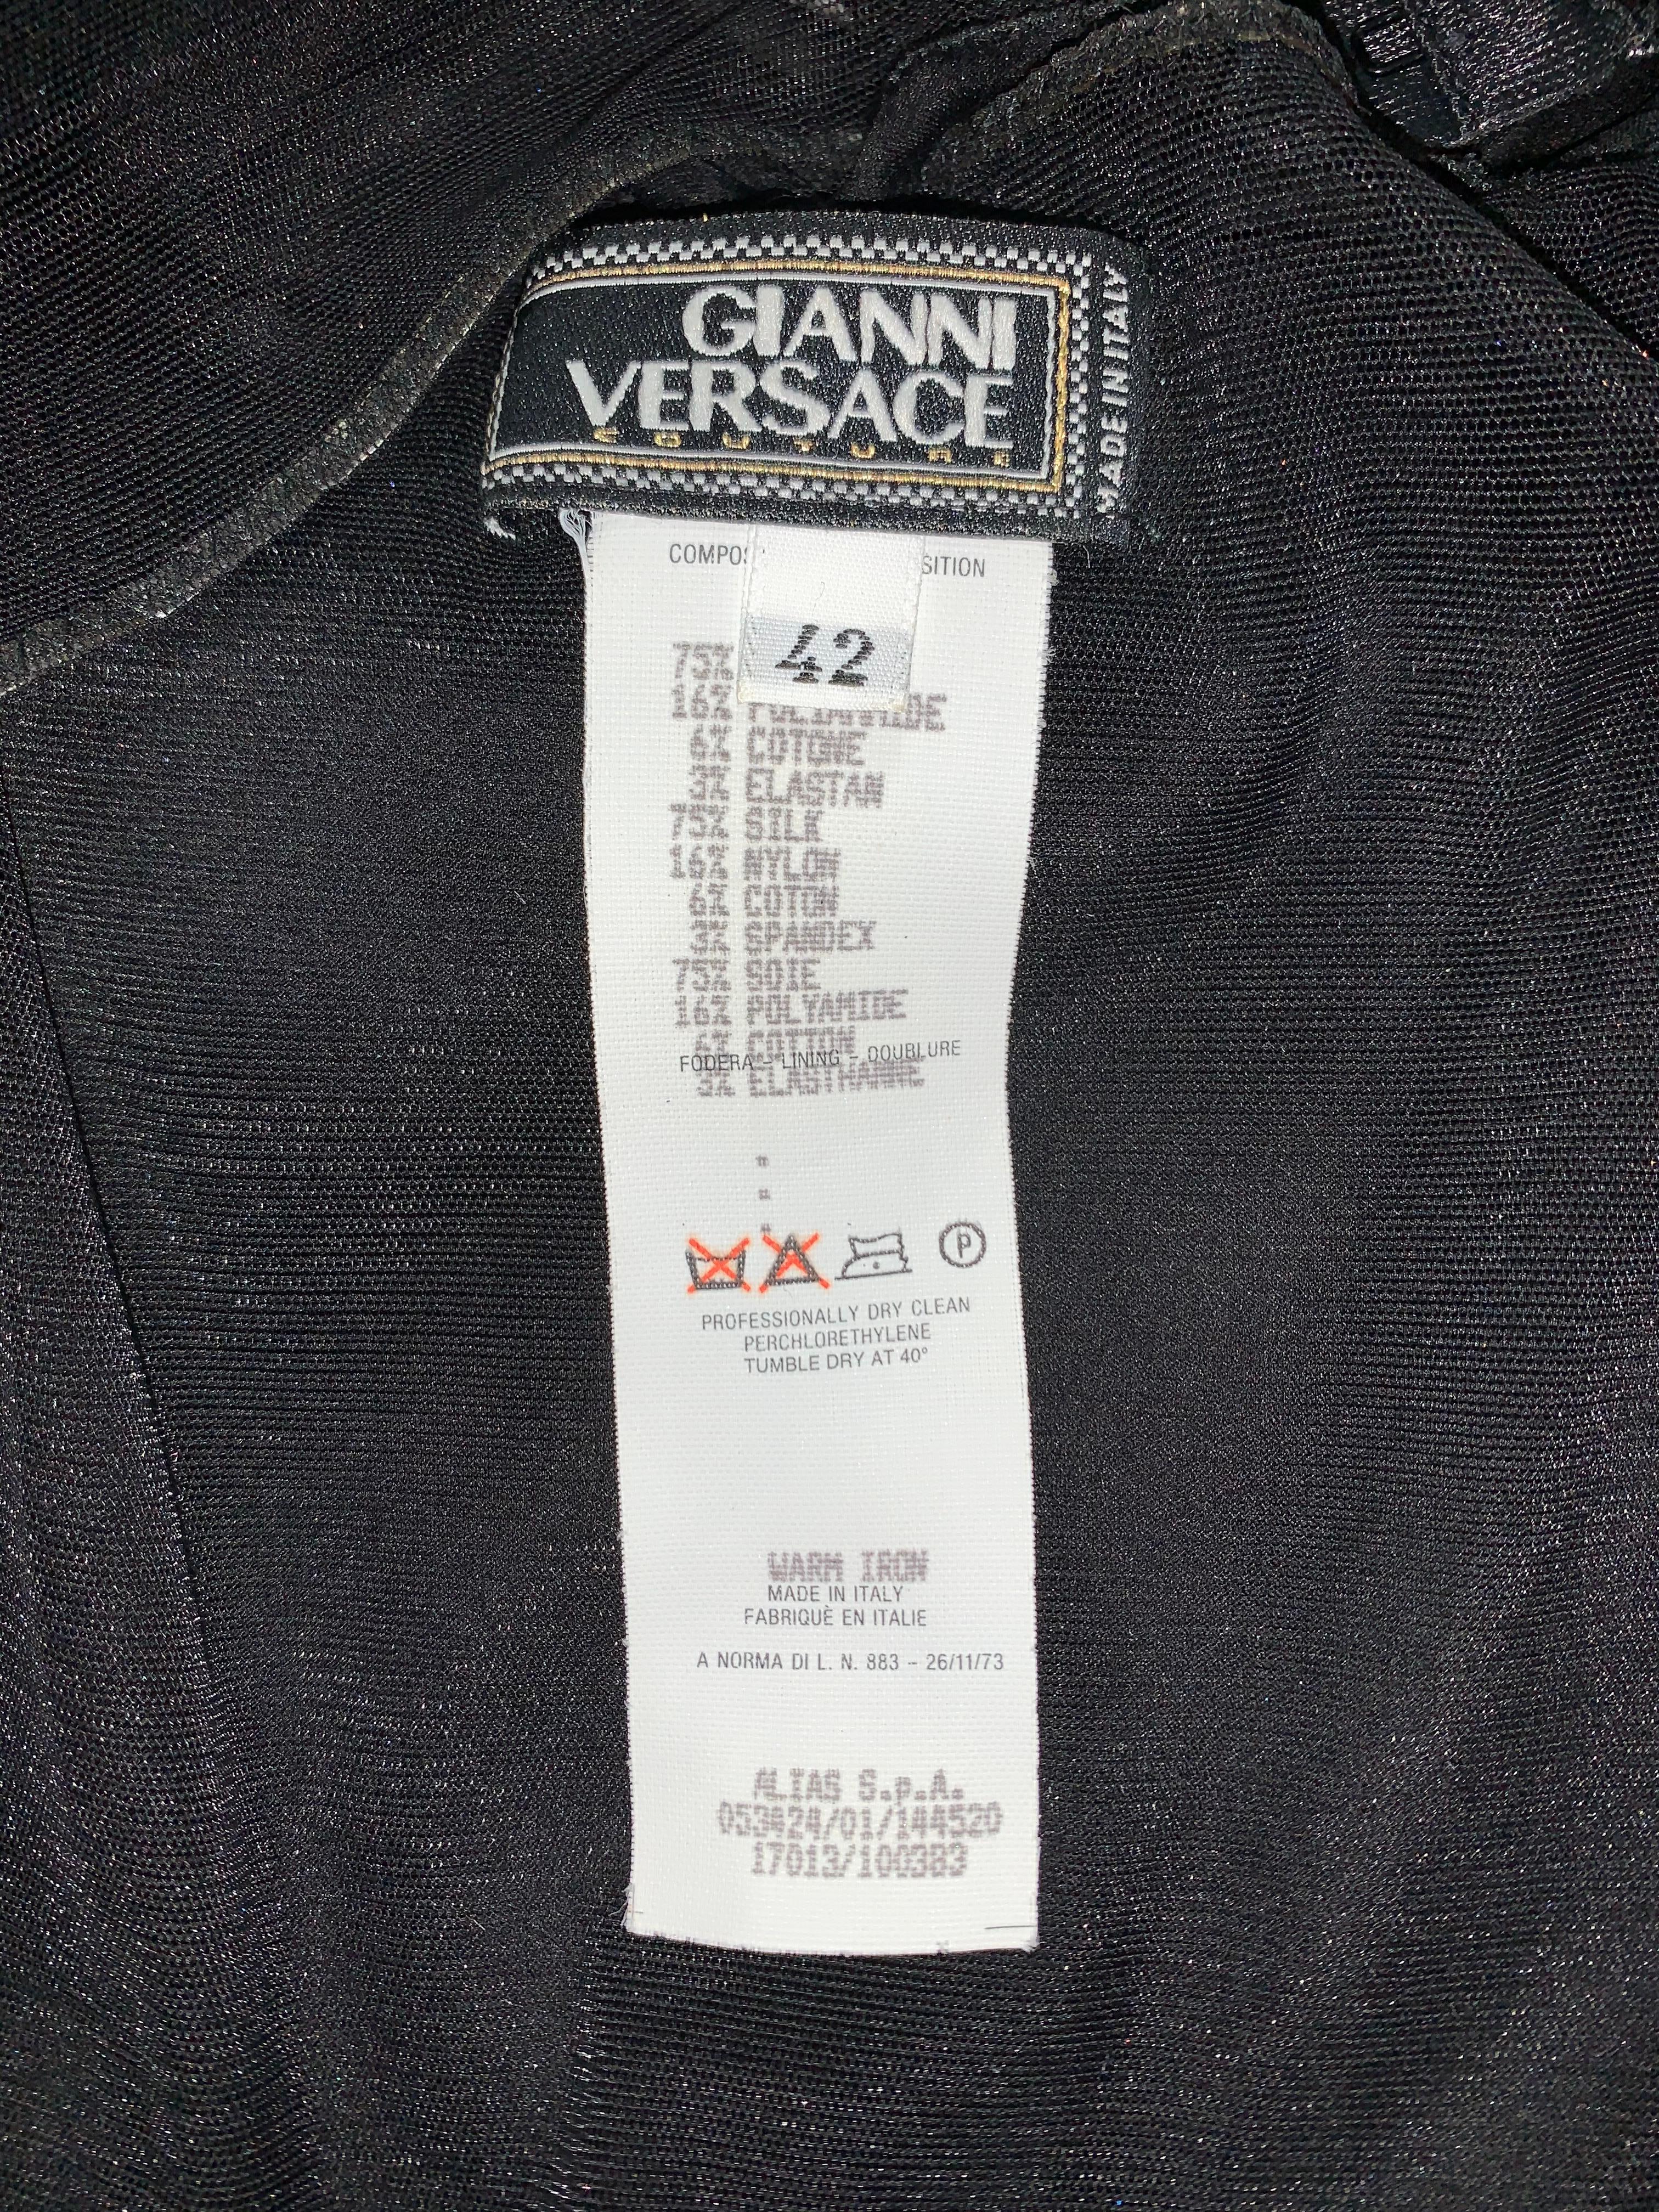 S/S 2001 Gianni Versace Plunging Sheer Black Wrap Bodysuit Mini Dress 1